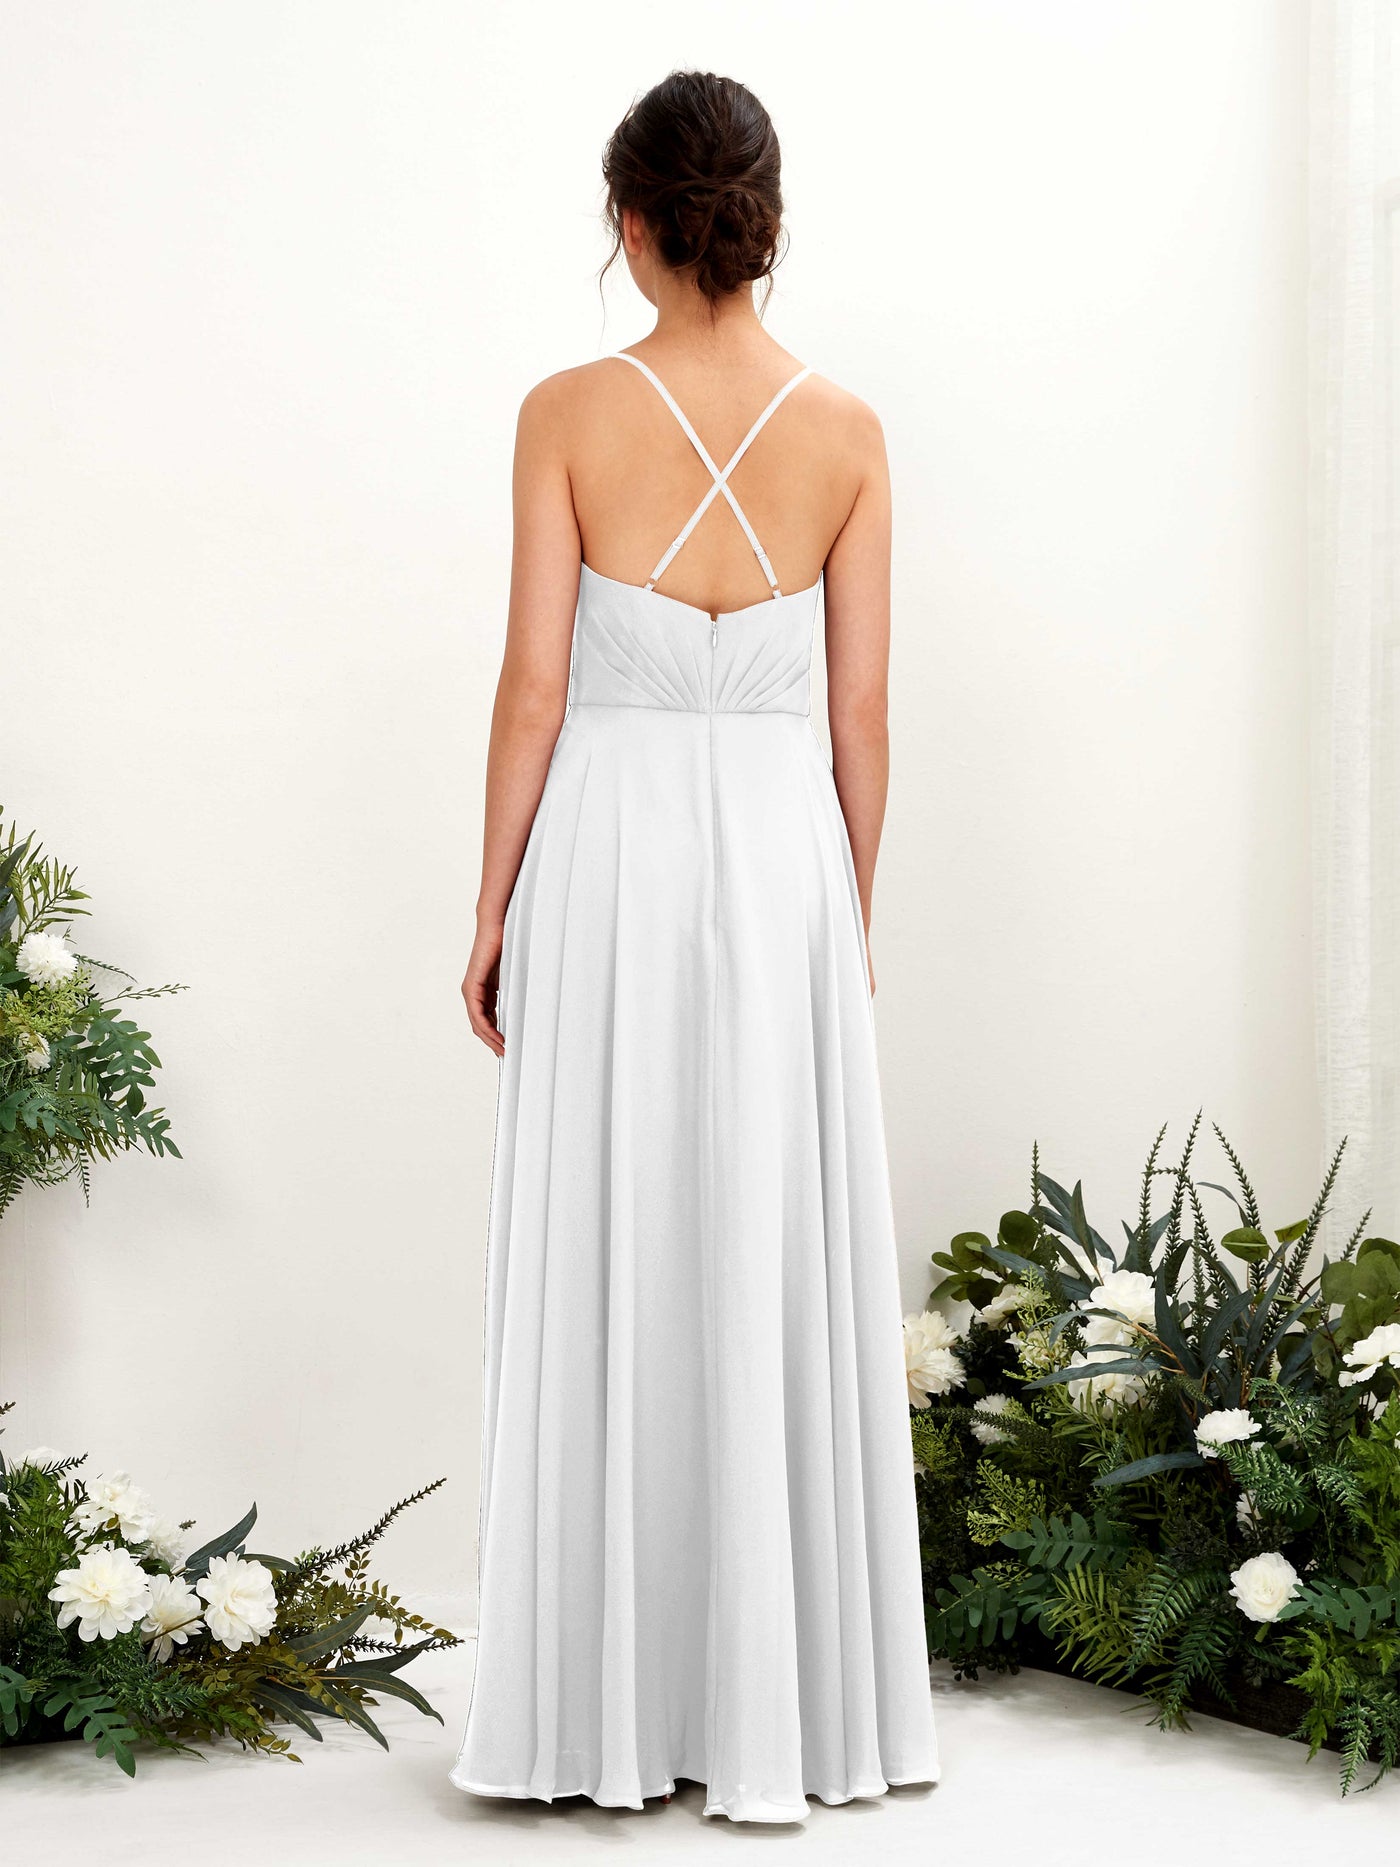 White Bridesmaid Dresses Bridesmaid Dress Chiffon Spaghetti-straps Full Length Sleeveless Wedding Party Dress (81224242)#color_white